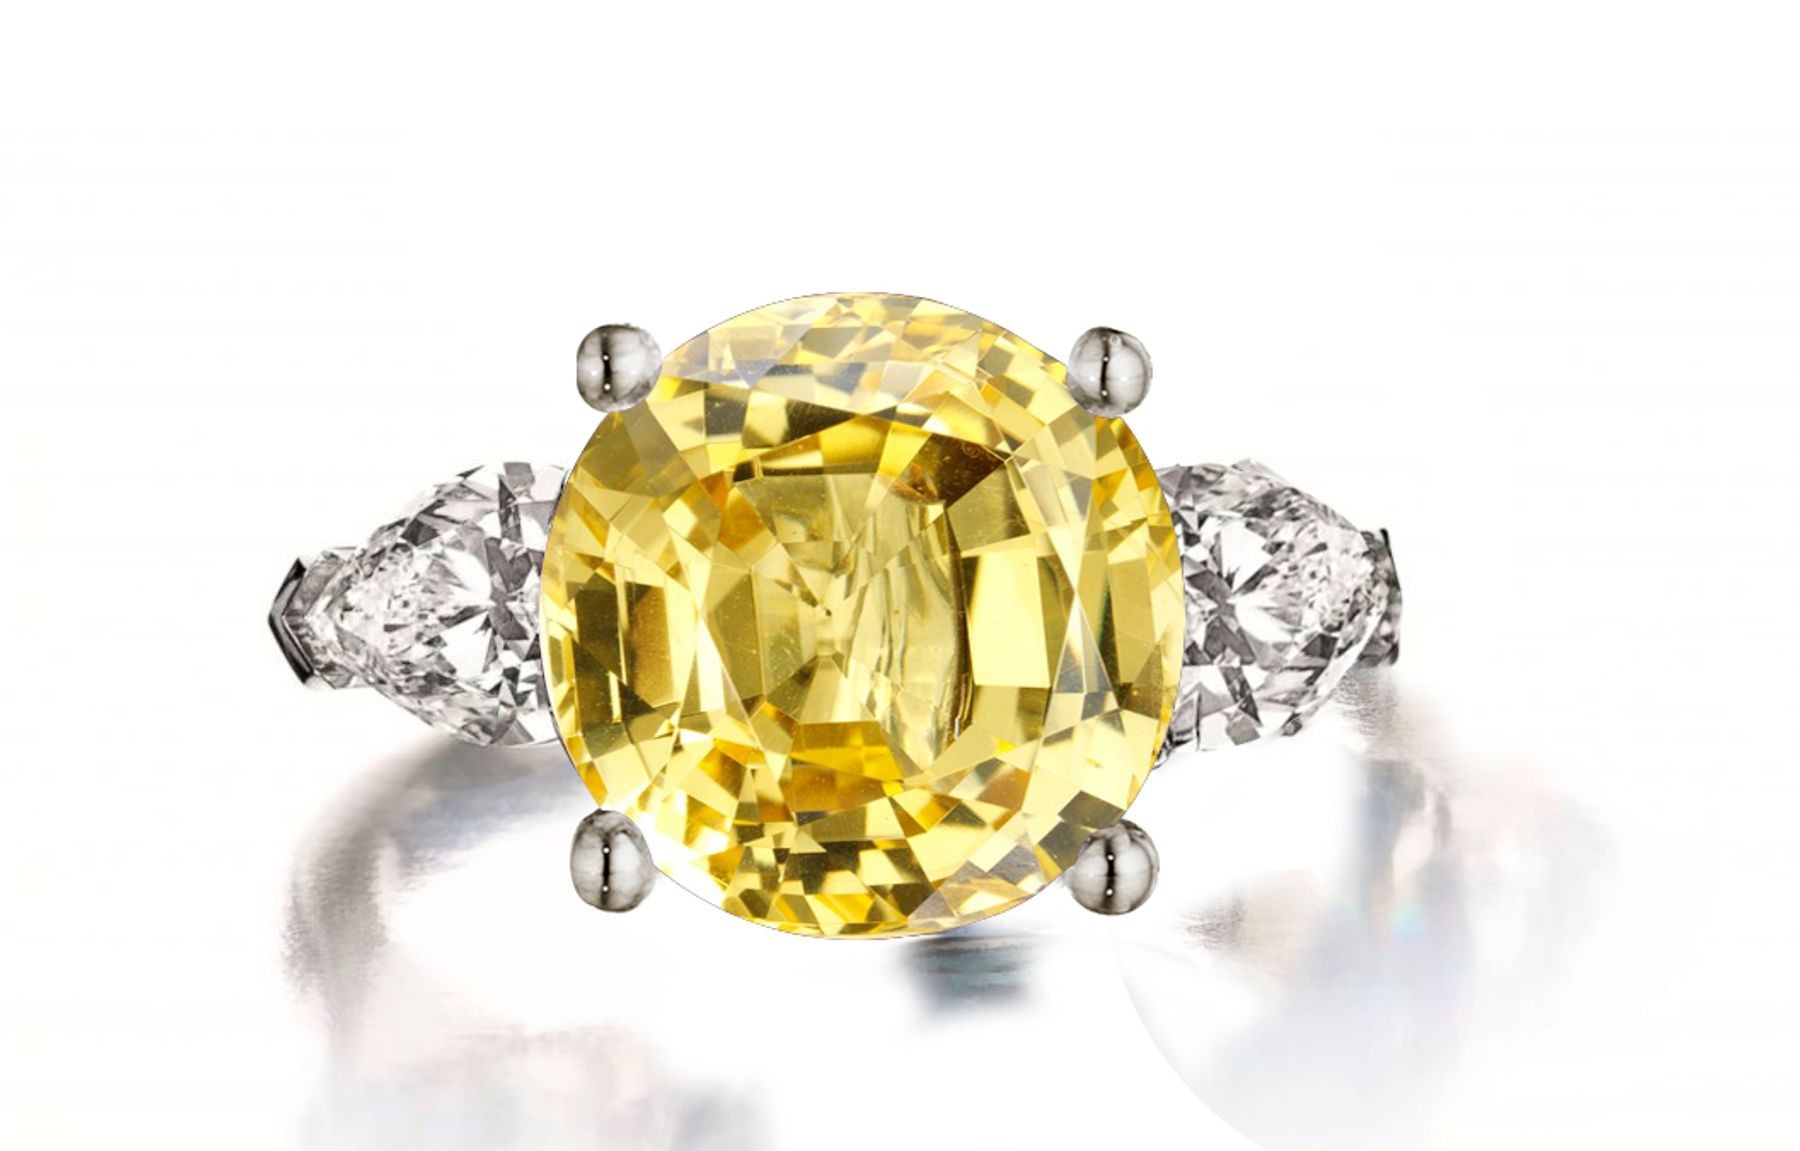 Custom Manufactured Three Stone Pear-Shaped Diamonds & Round Yellow Sapphire Ring